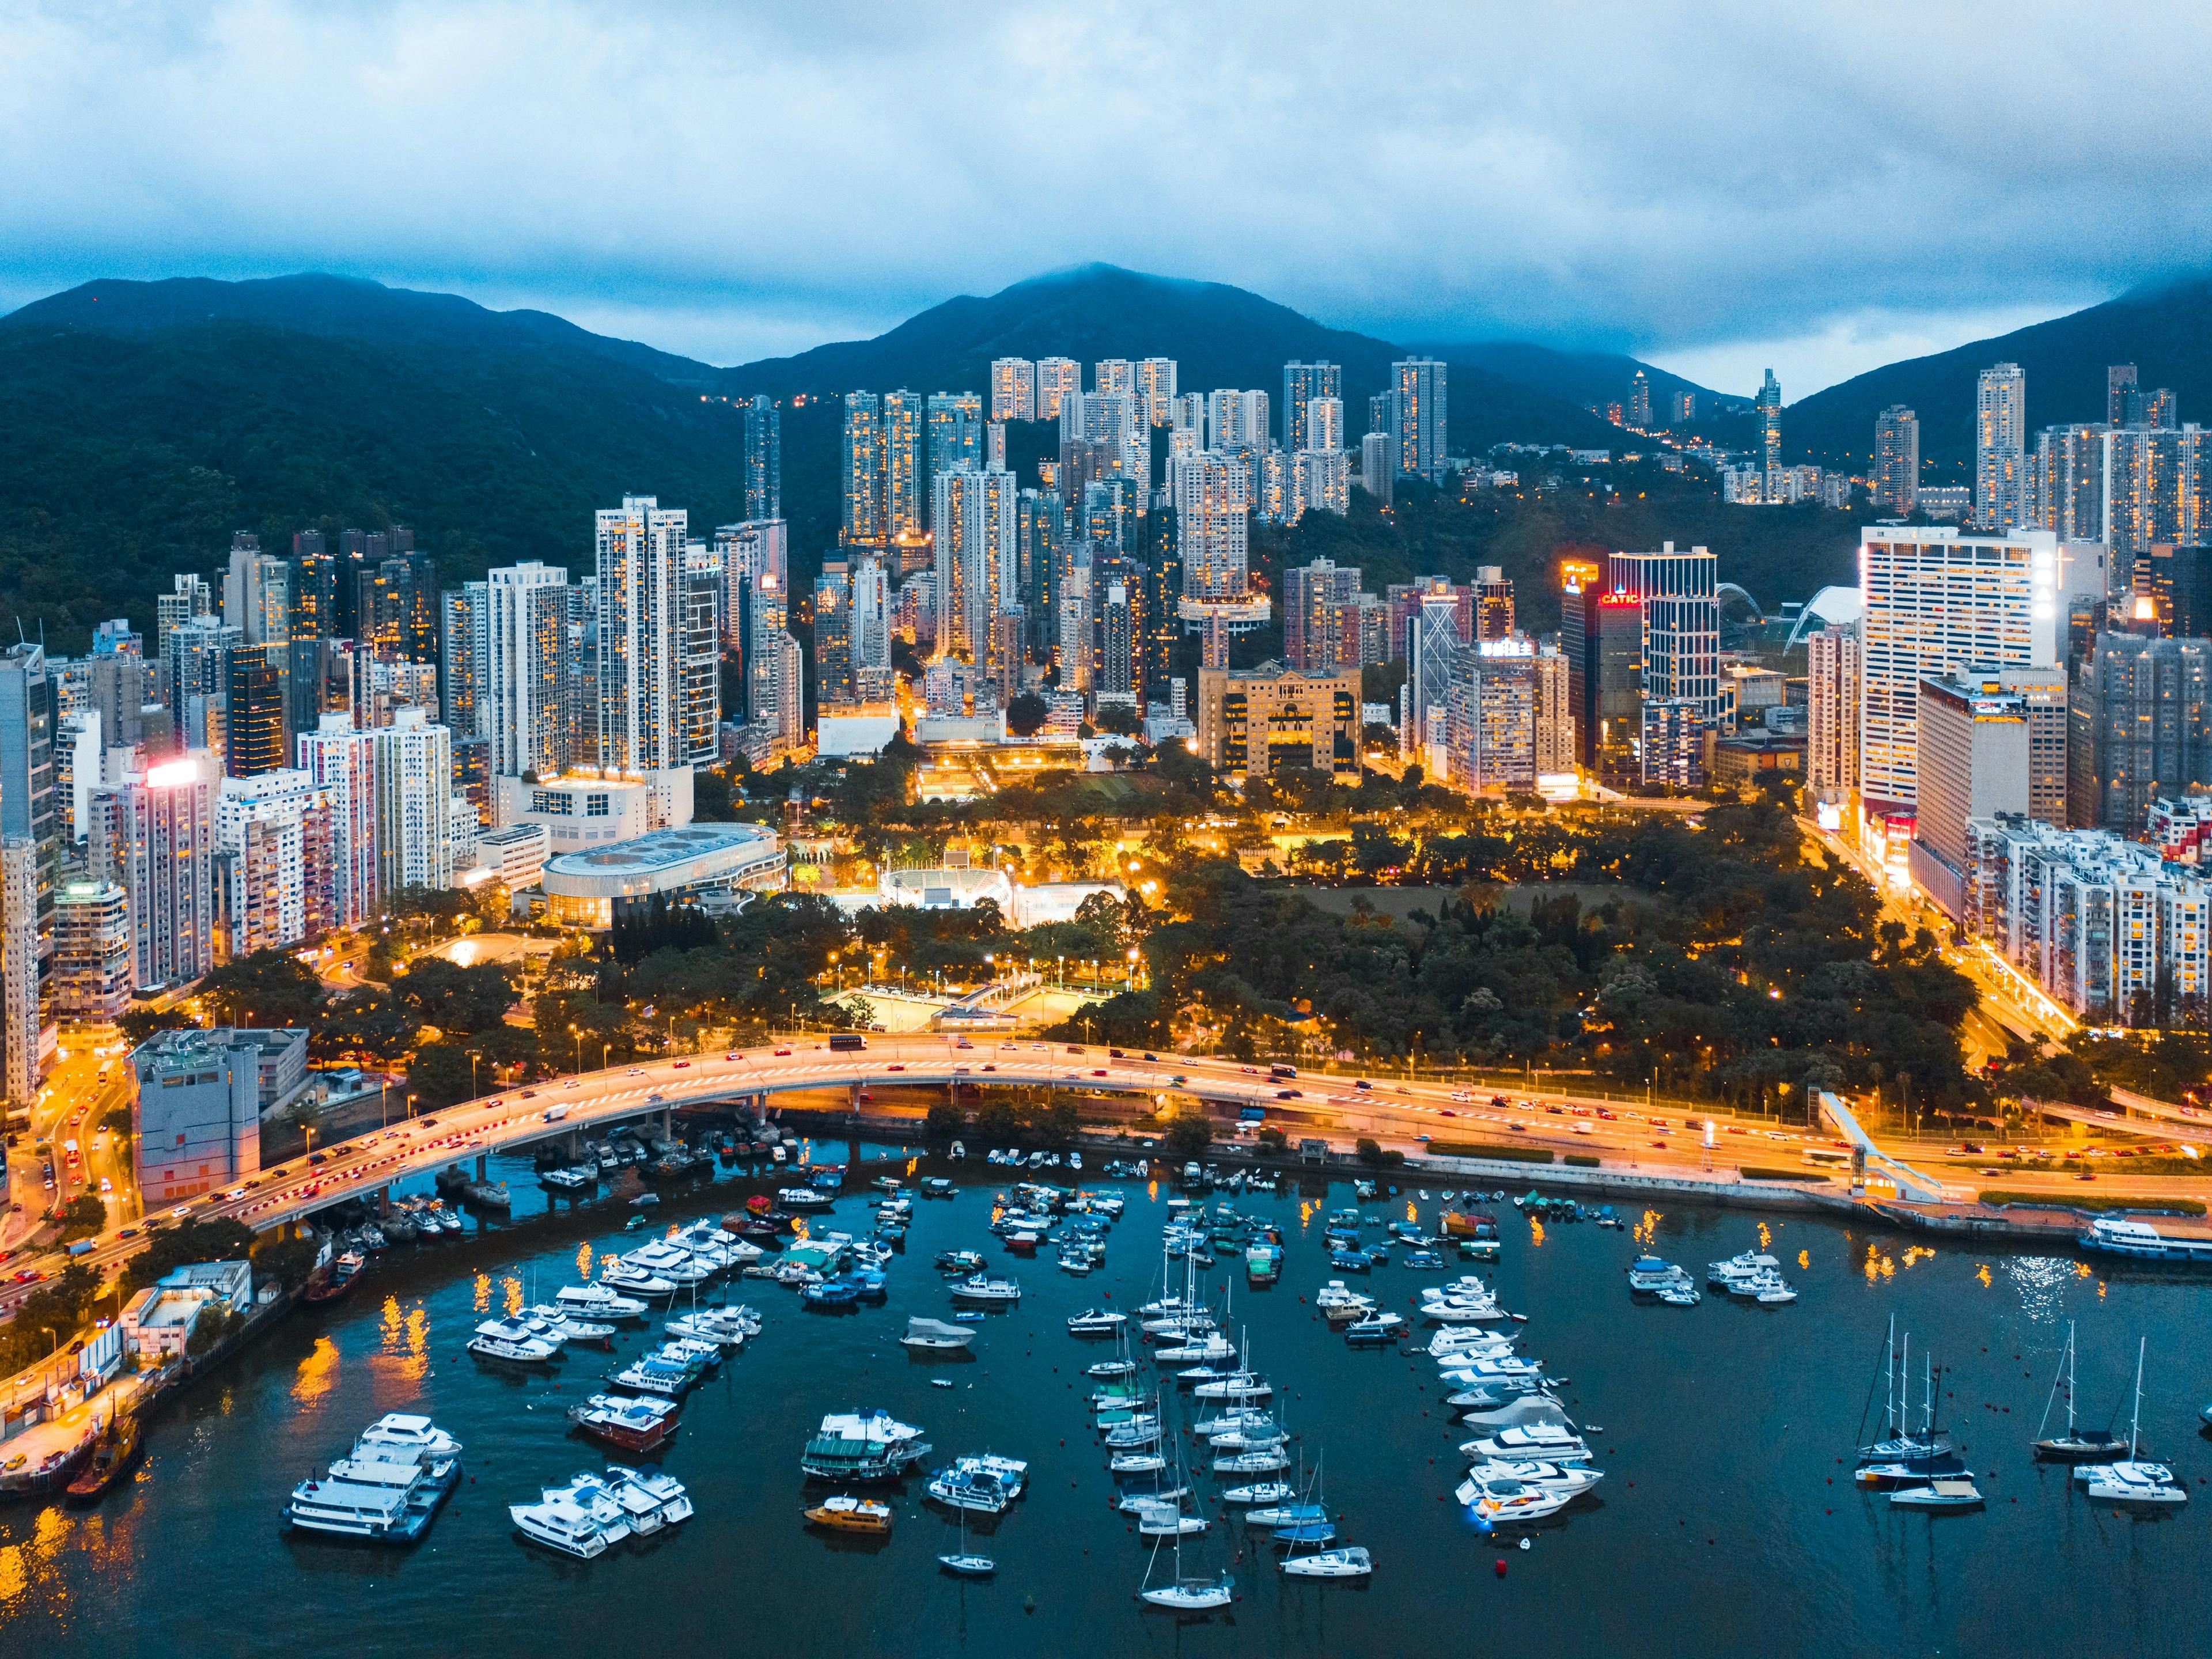 Hong Kong panorama taken from the sea